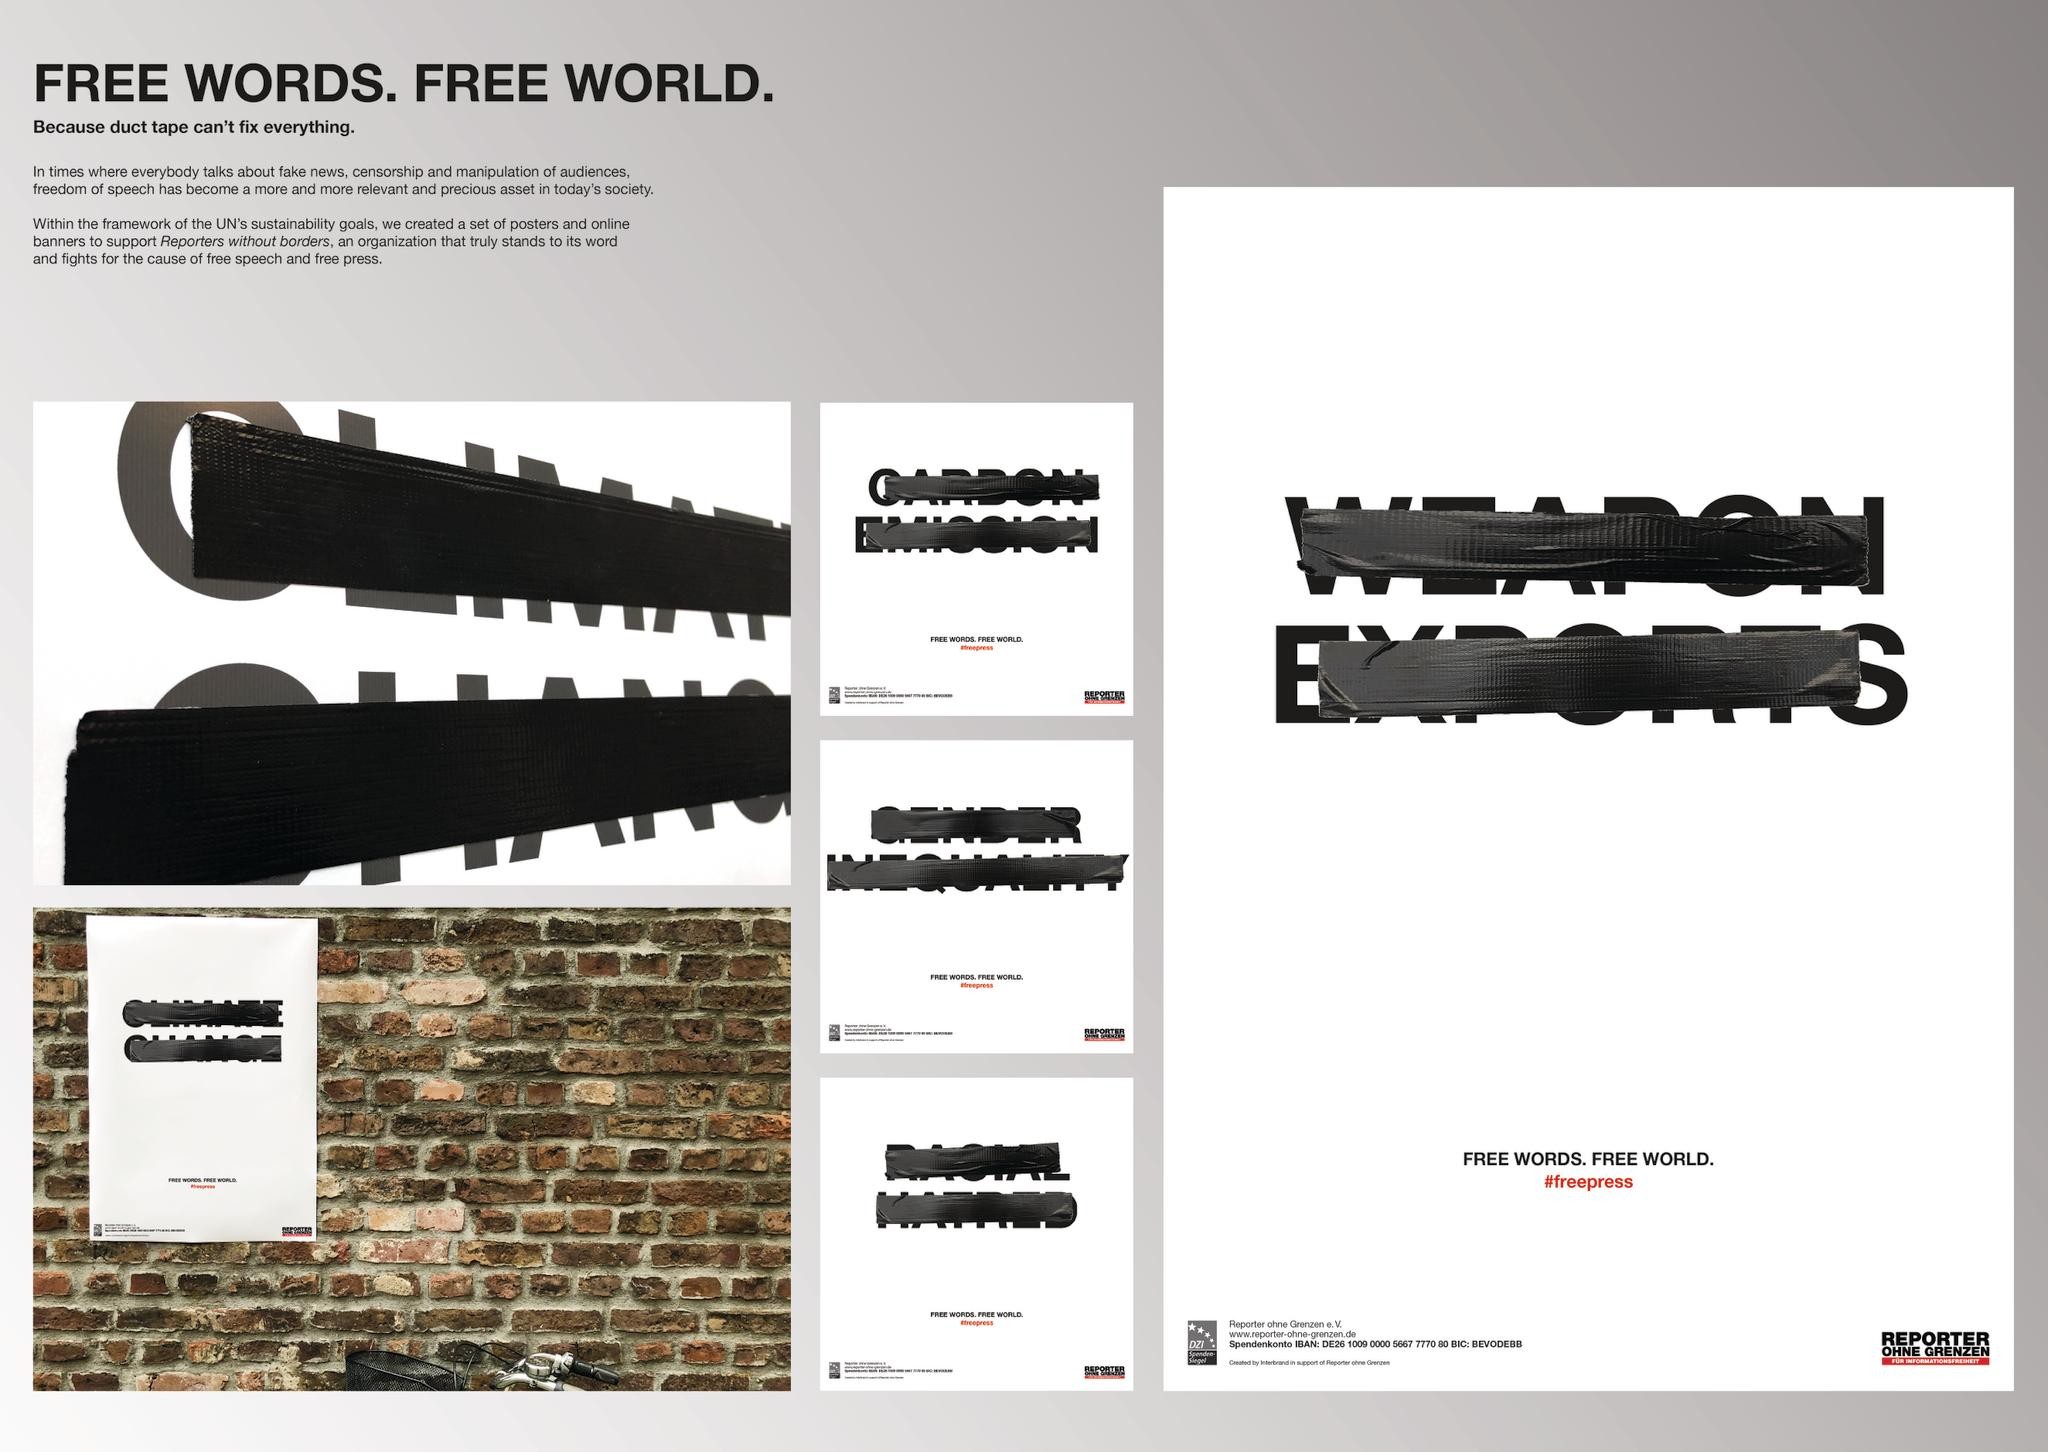 Free words. Free world.